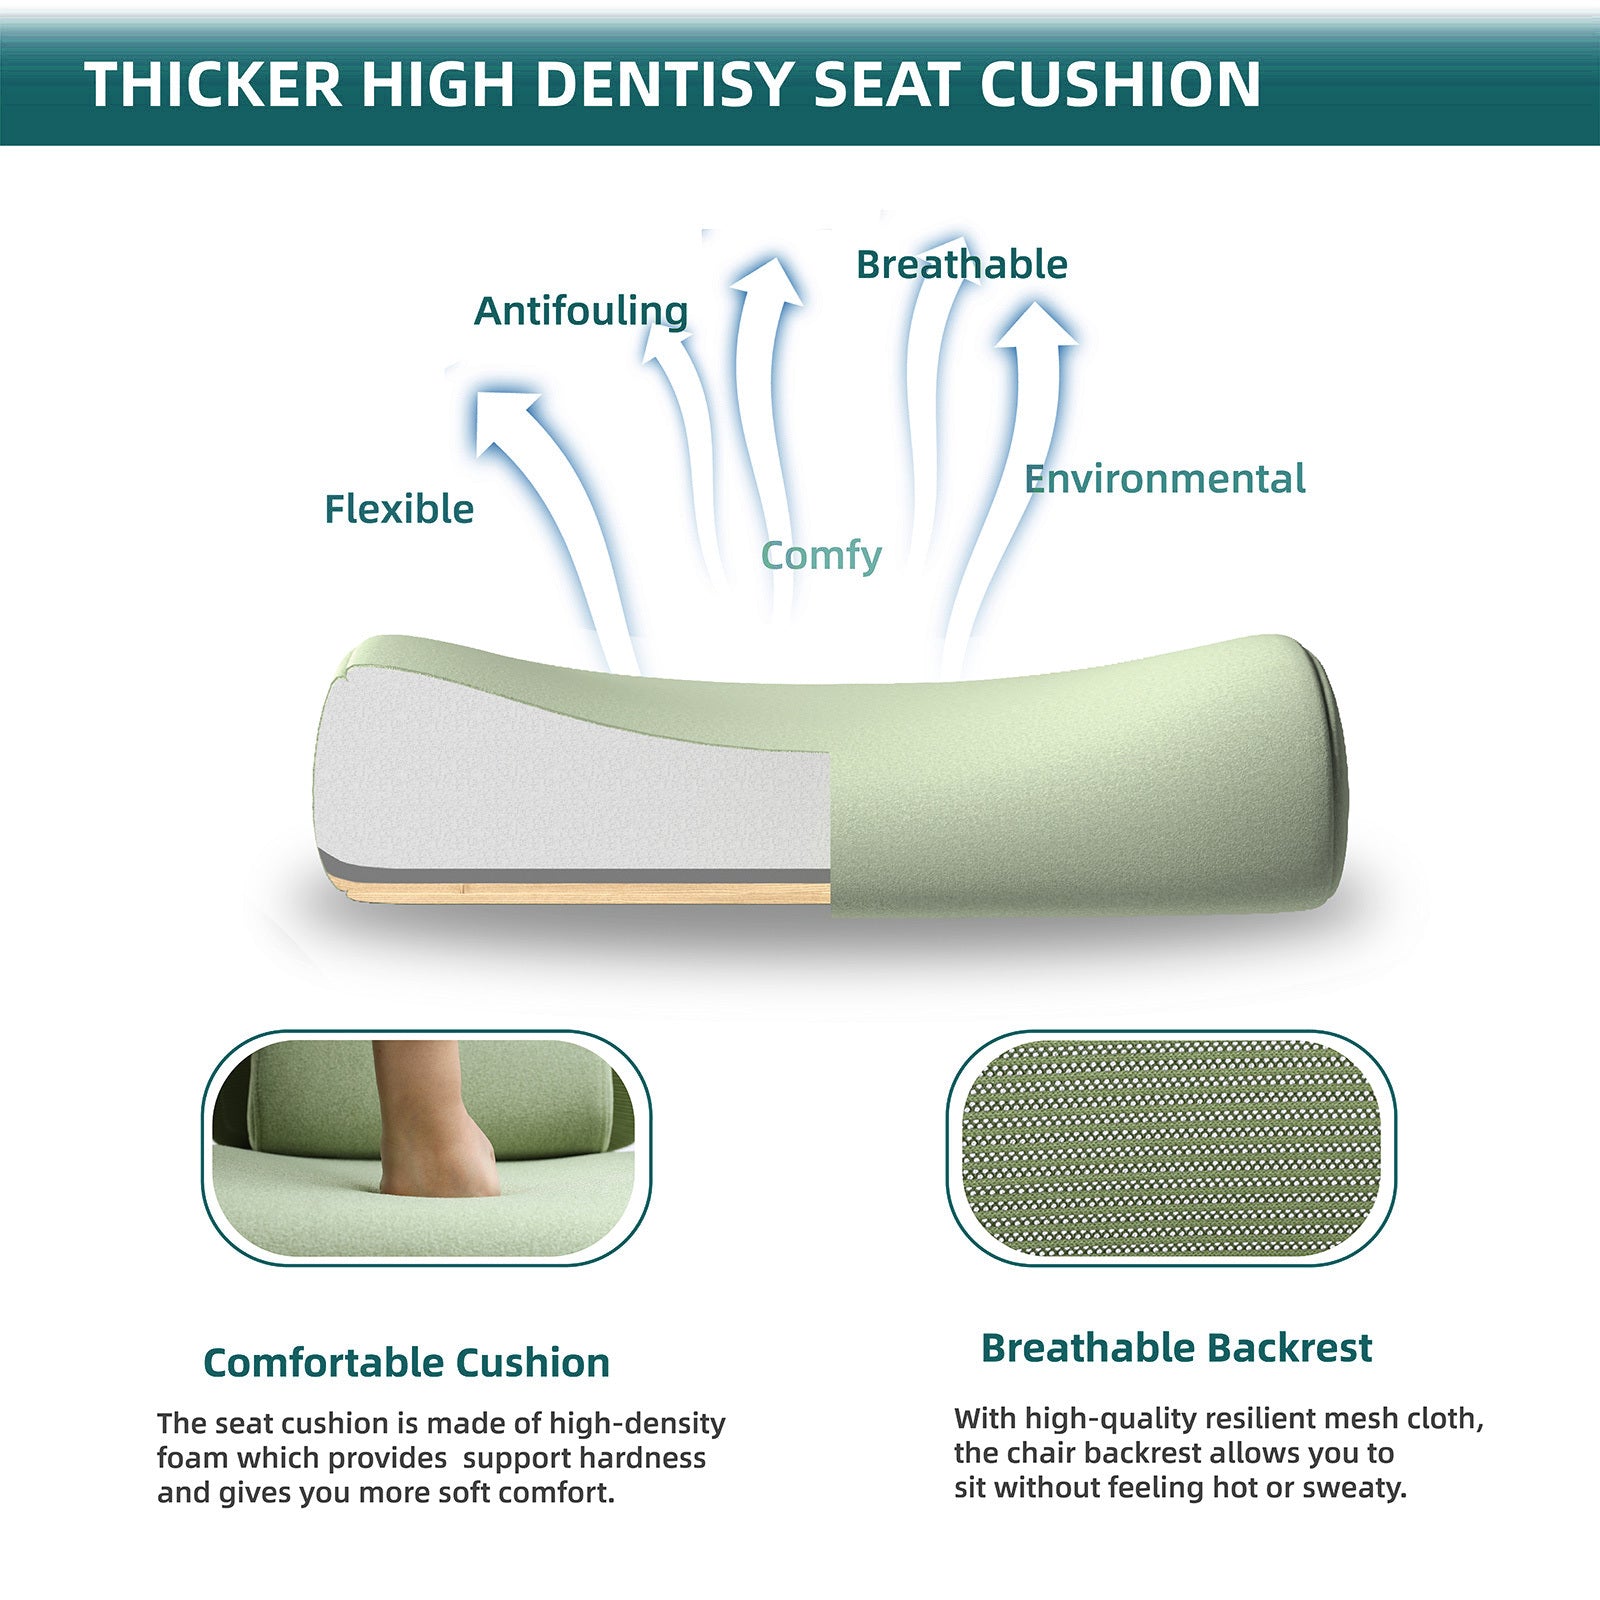 SWEETCRISPY Mesh High Back Ergonomic Office Chair green-nylon mesh